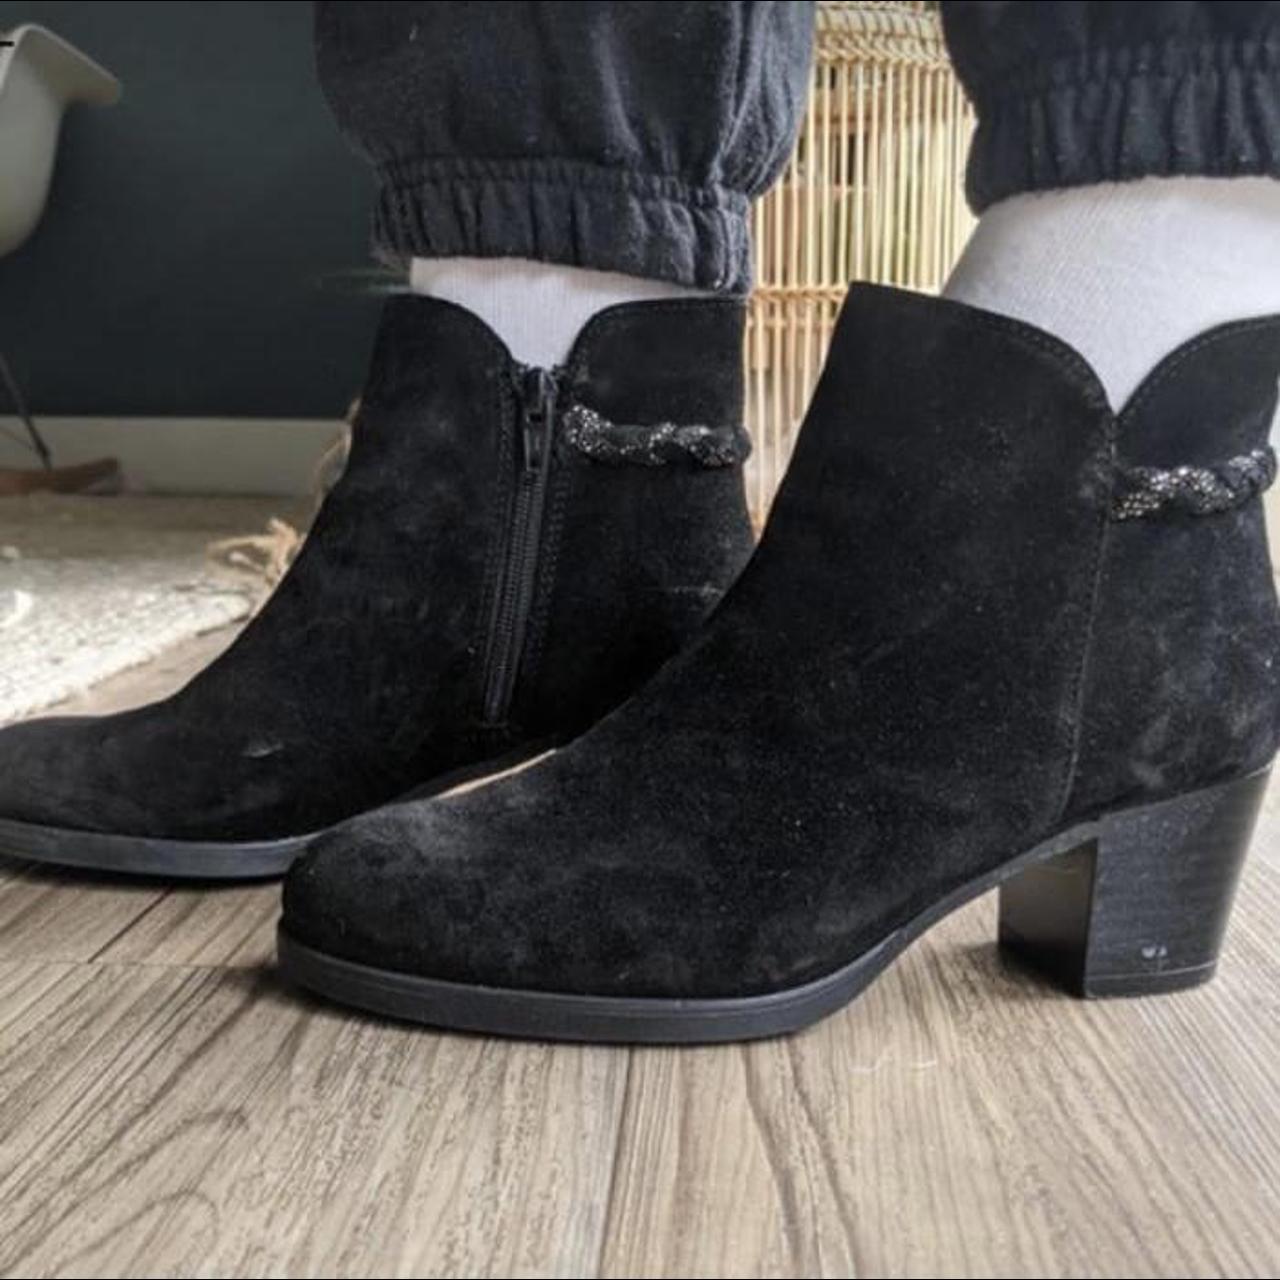 Leather black boots - Depop